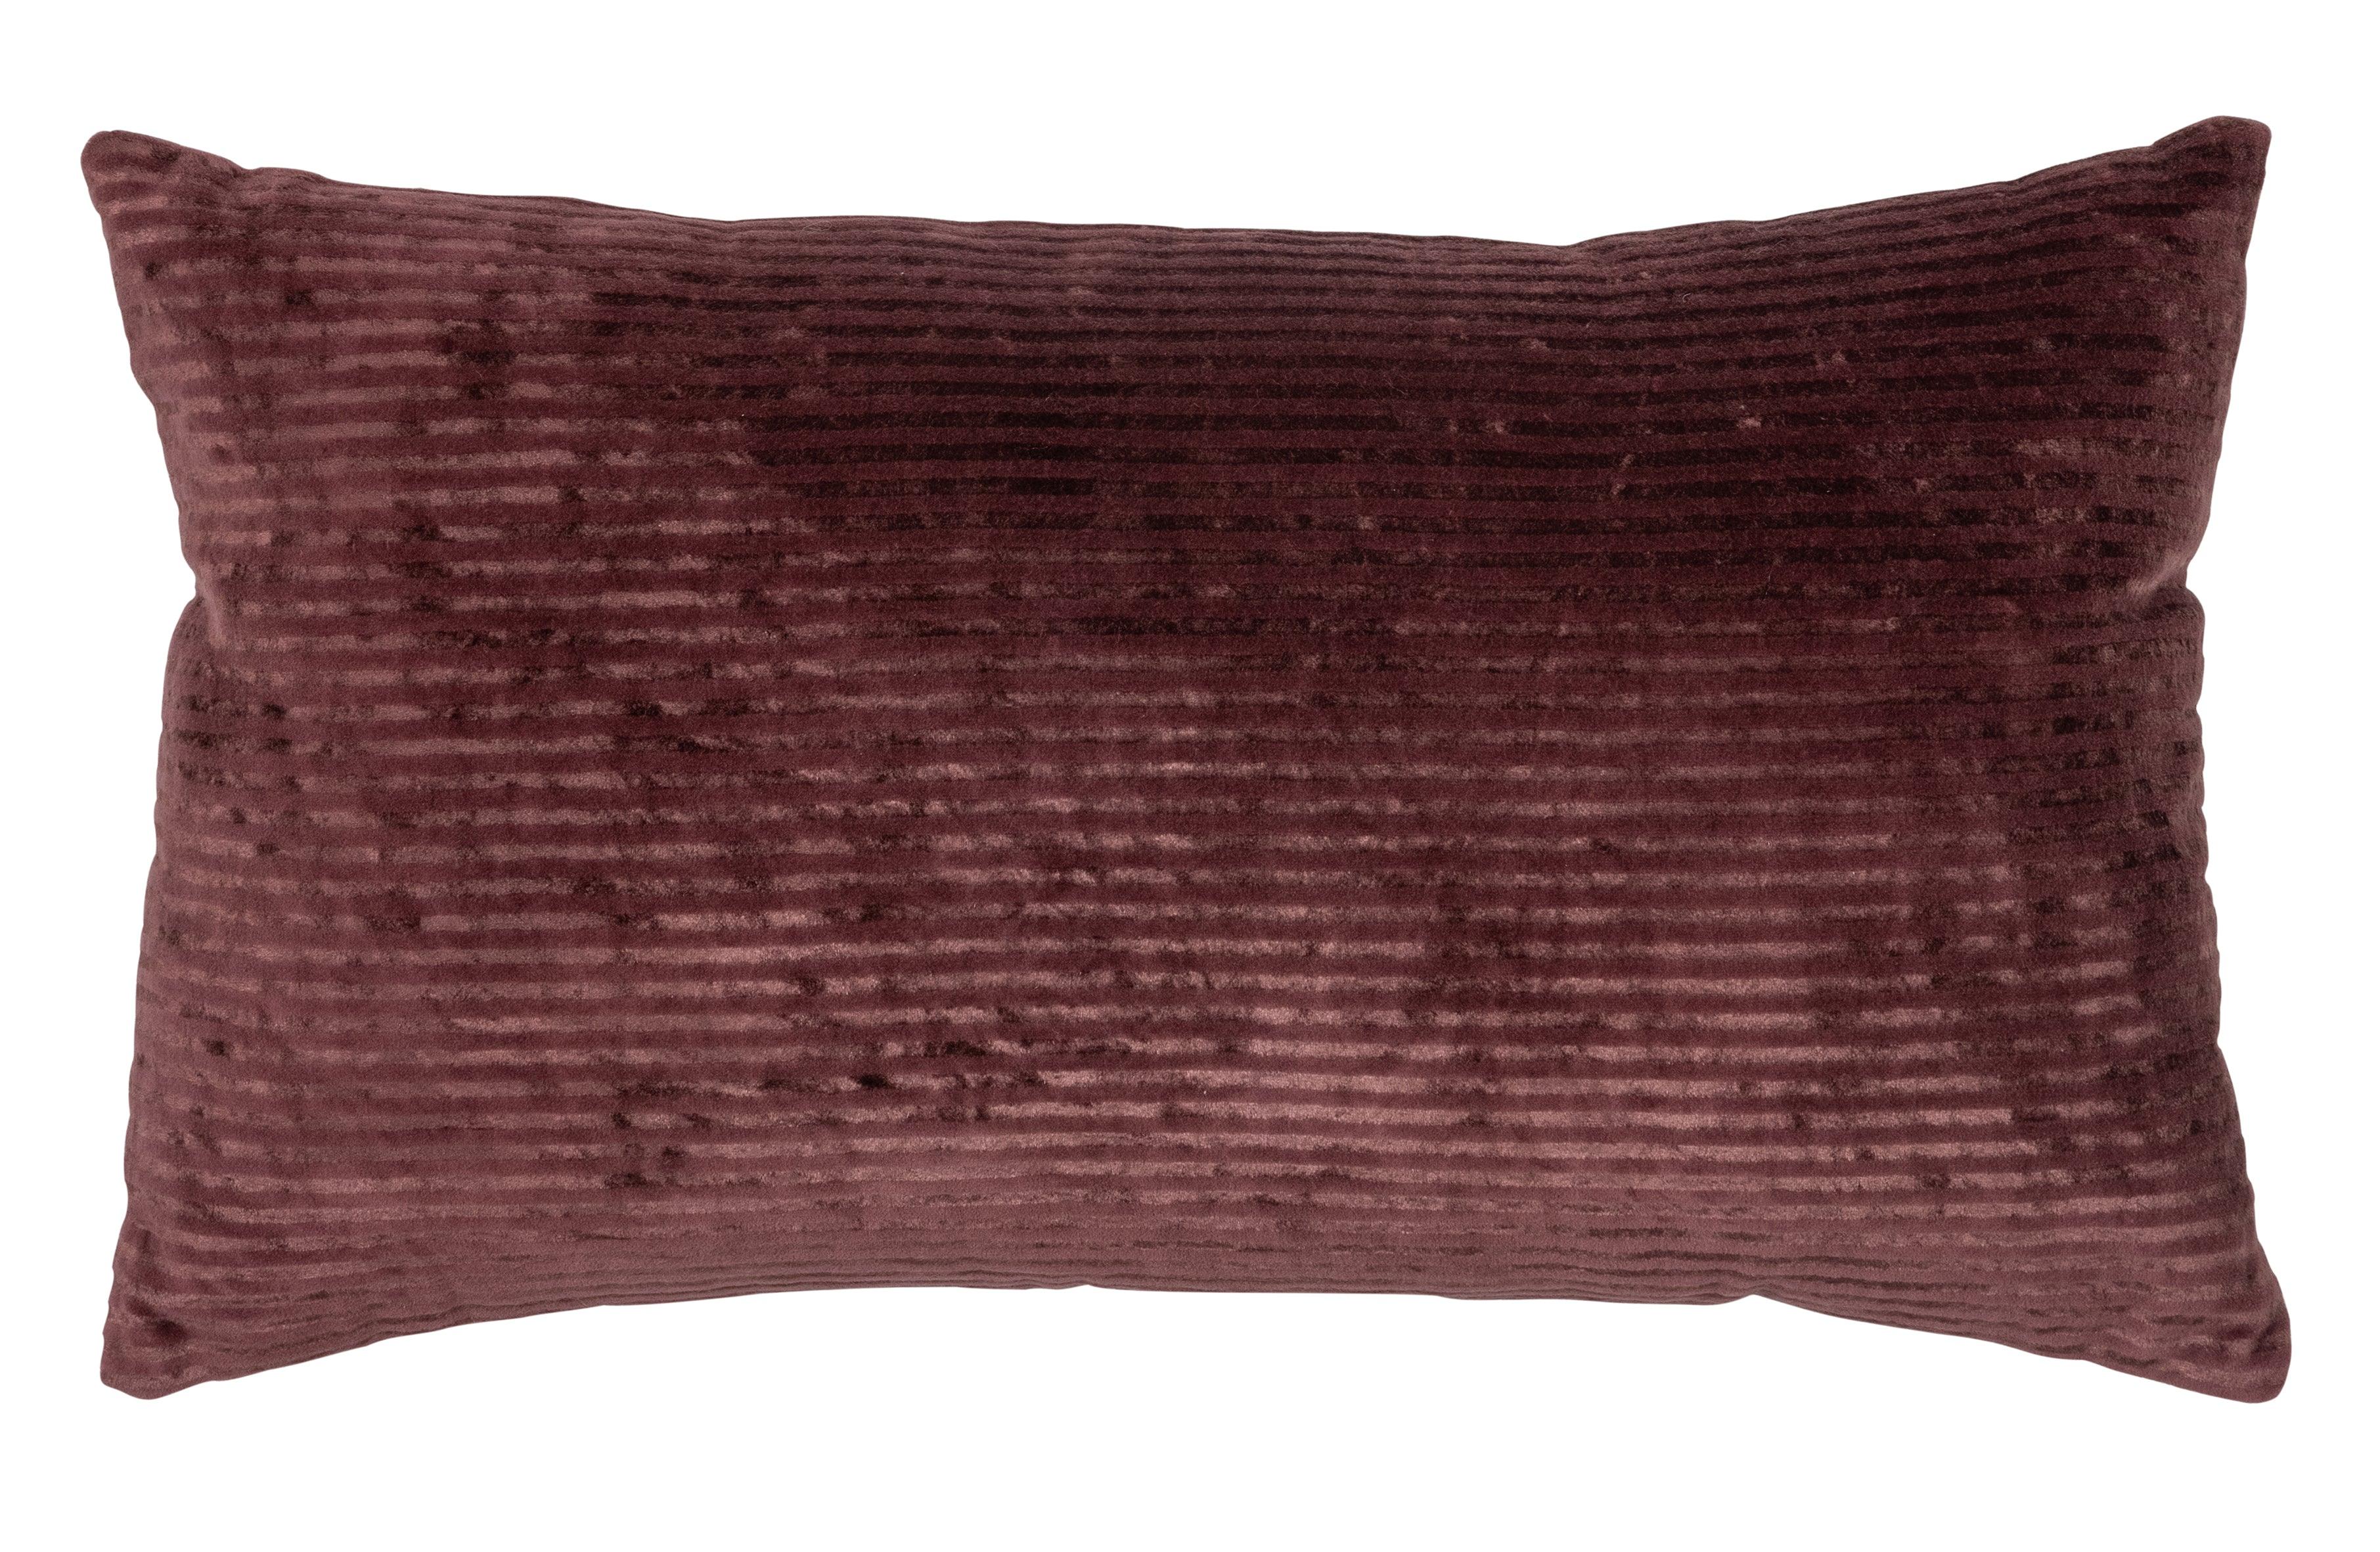 Suflet Cushion Stripe Wine 30x50cm - PARIS14A.RO